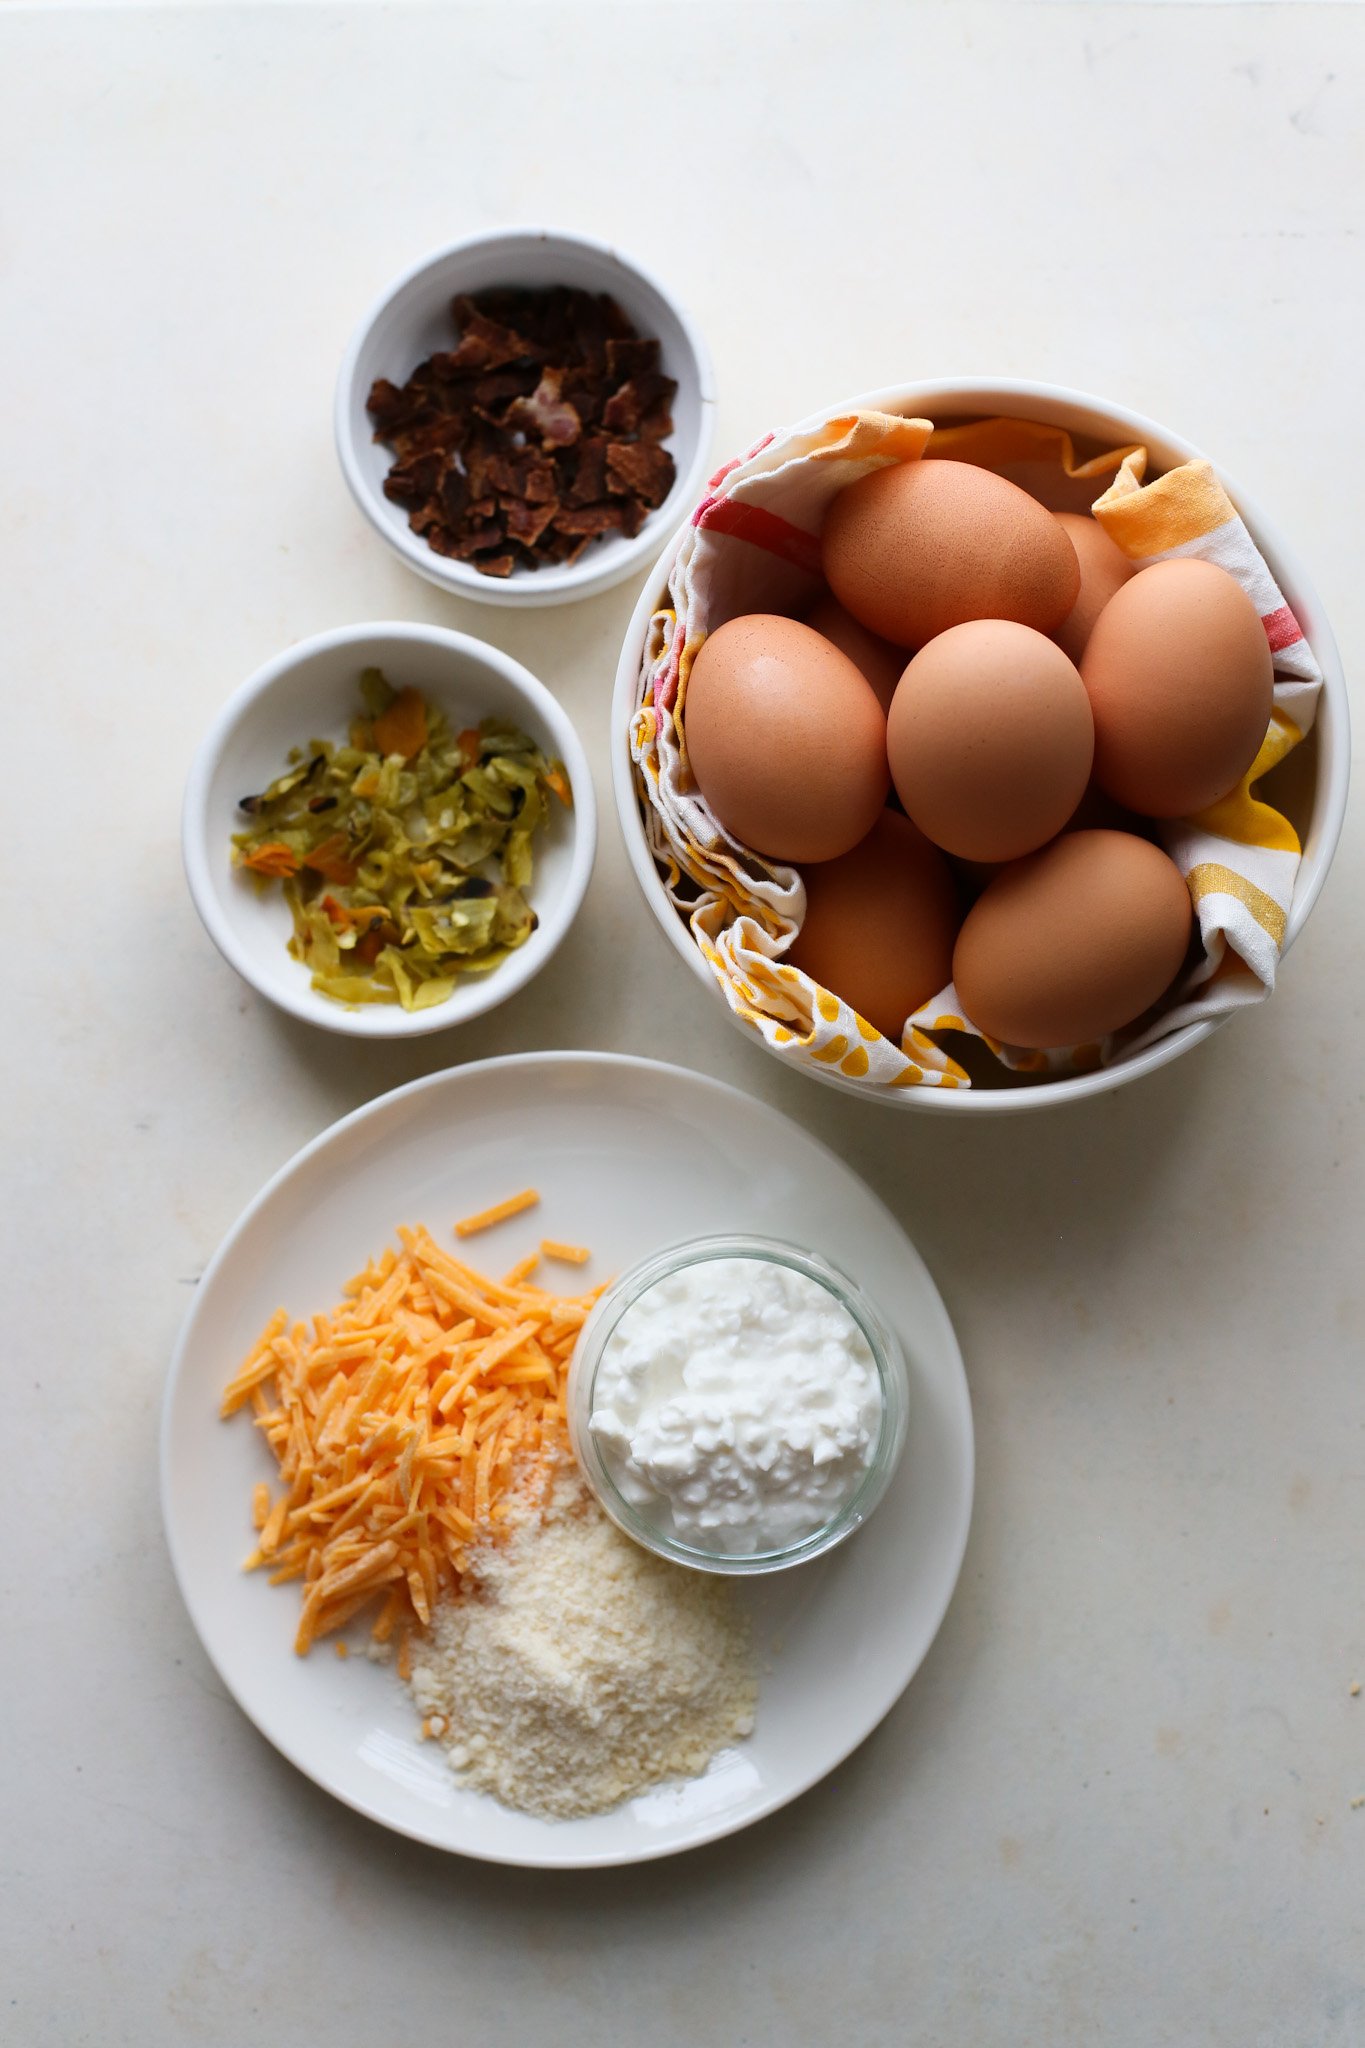 Instant Pot Egg Bites (3 Ways!) - Detoxinista